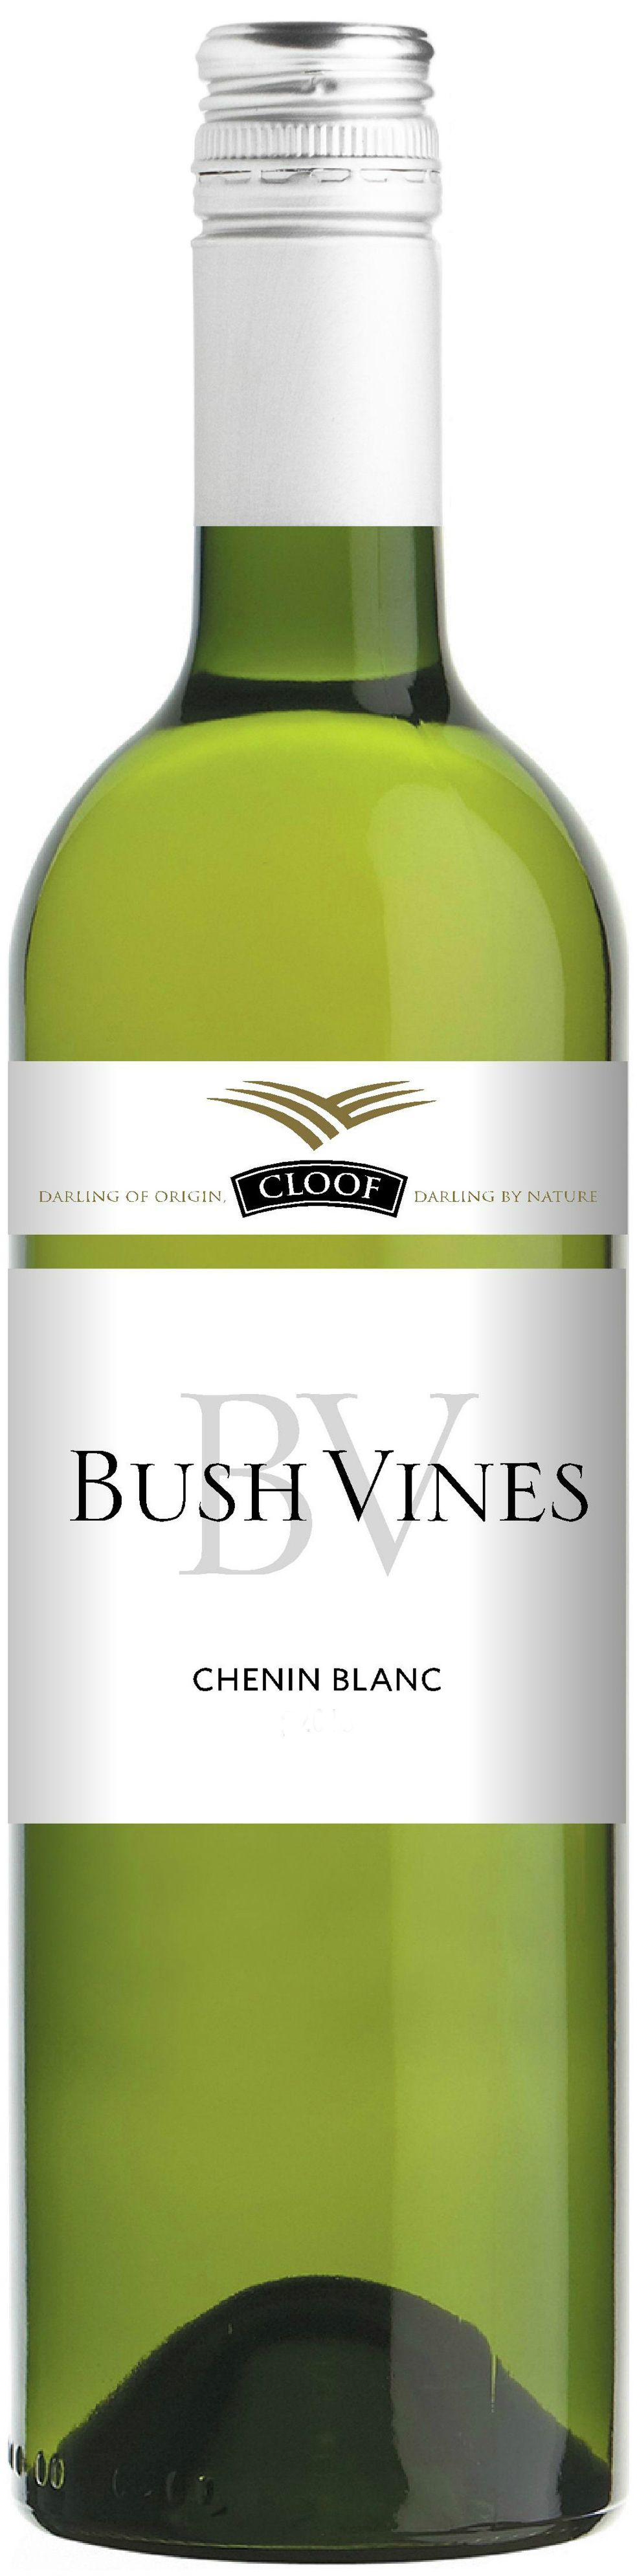 Cloof, Bush Vines Chenin Blanc, 2018